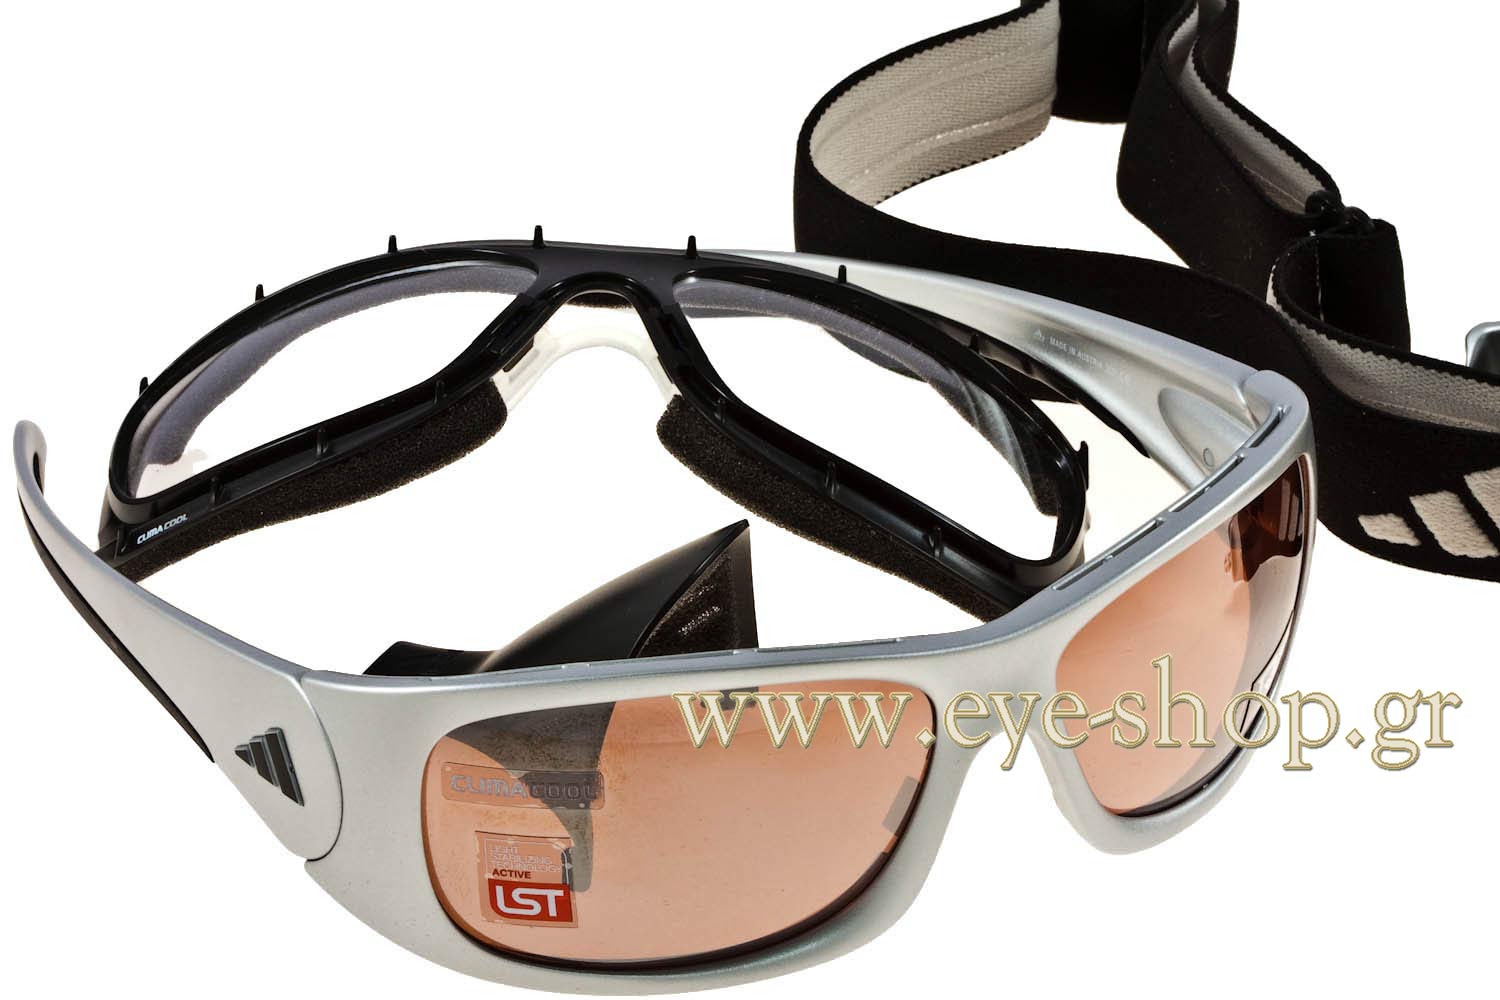 ayudante novedad constante thomas-huber-wearing-sunglasses-adidas-terrex-pro-a143.html wearing Adidas  sunglasses at EyeShop